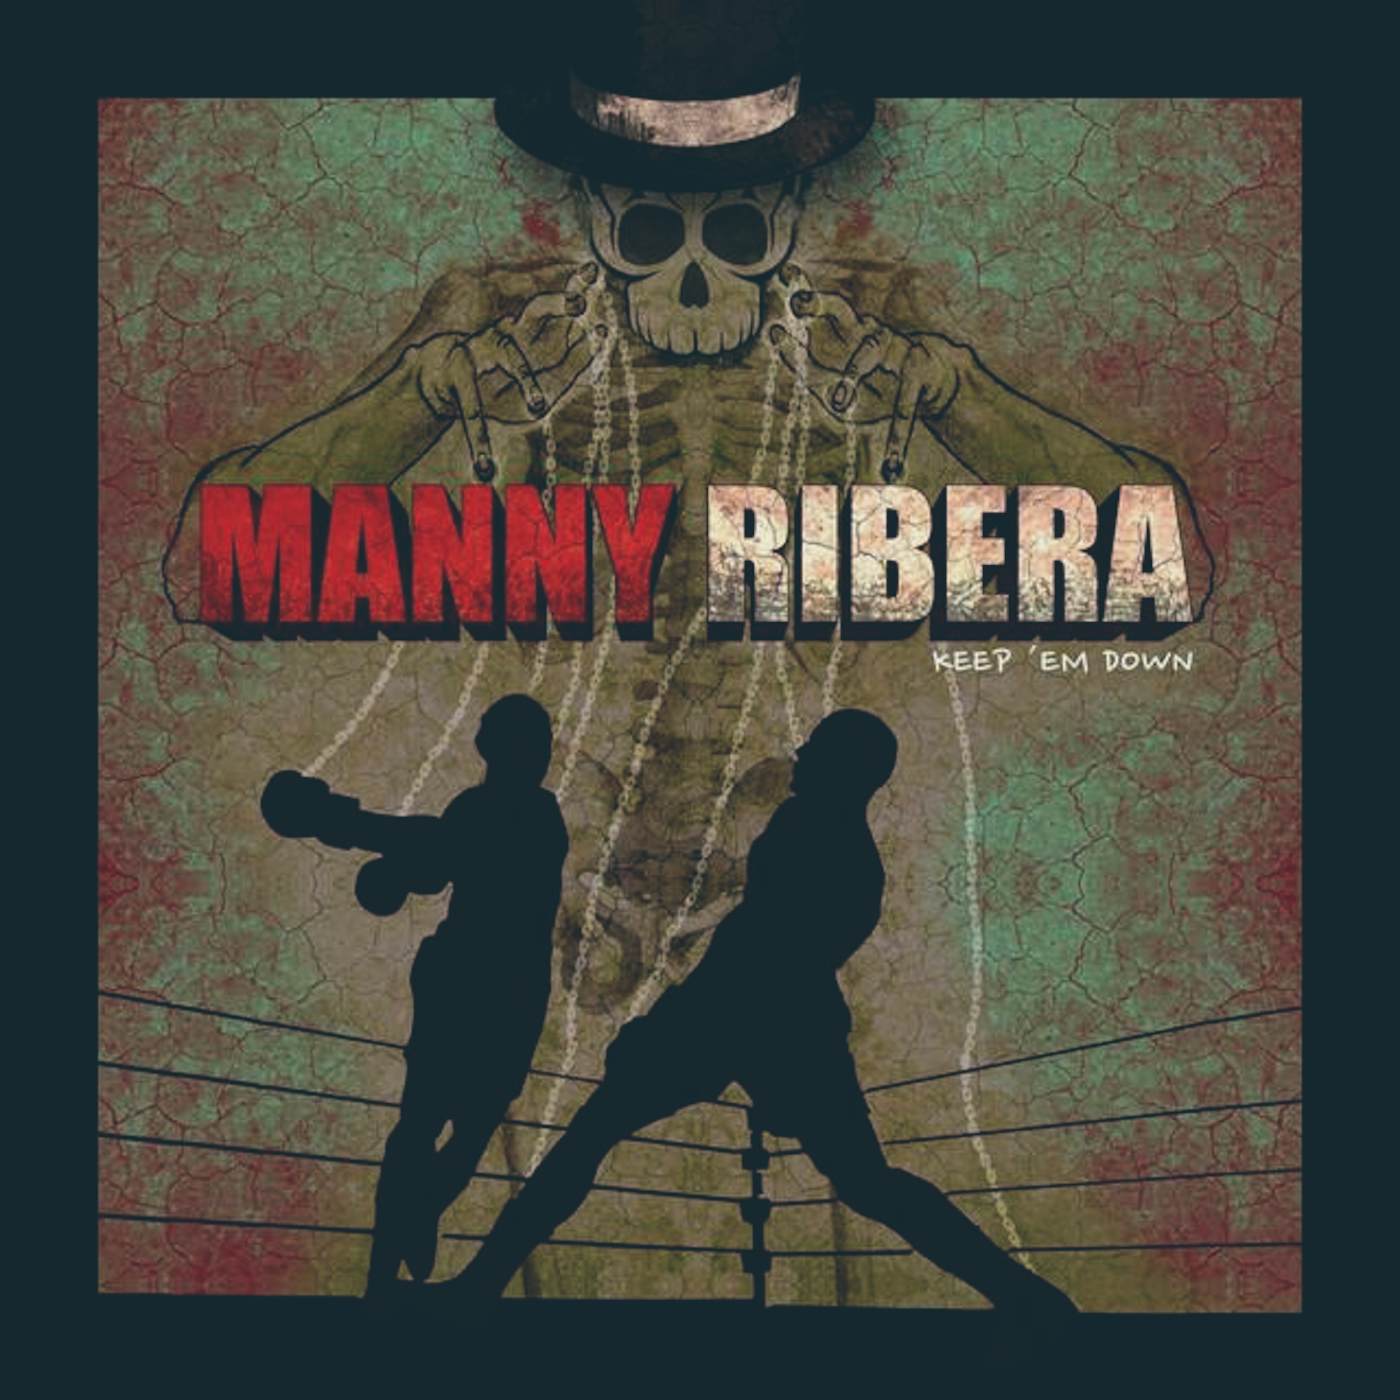 Manny Ribera